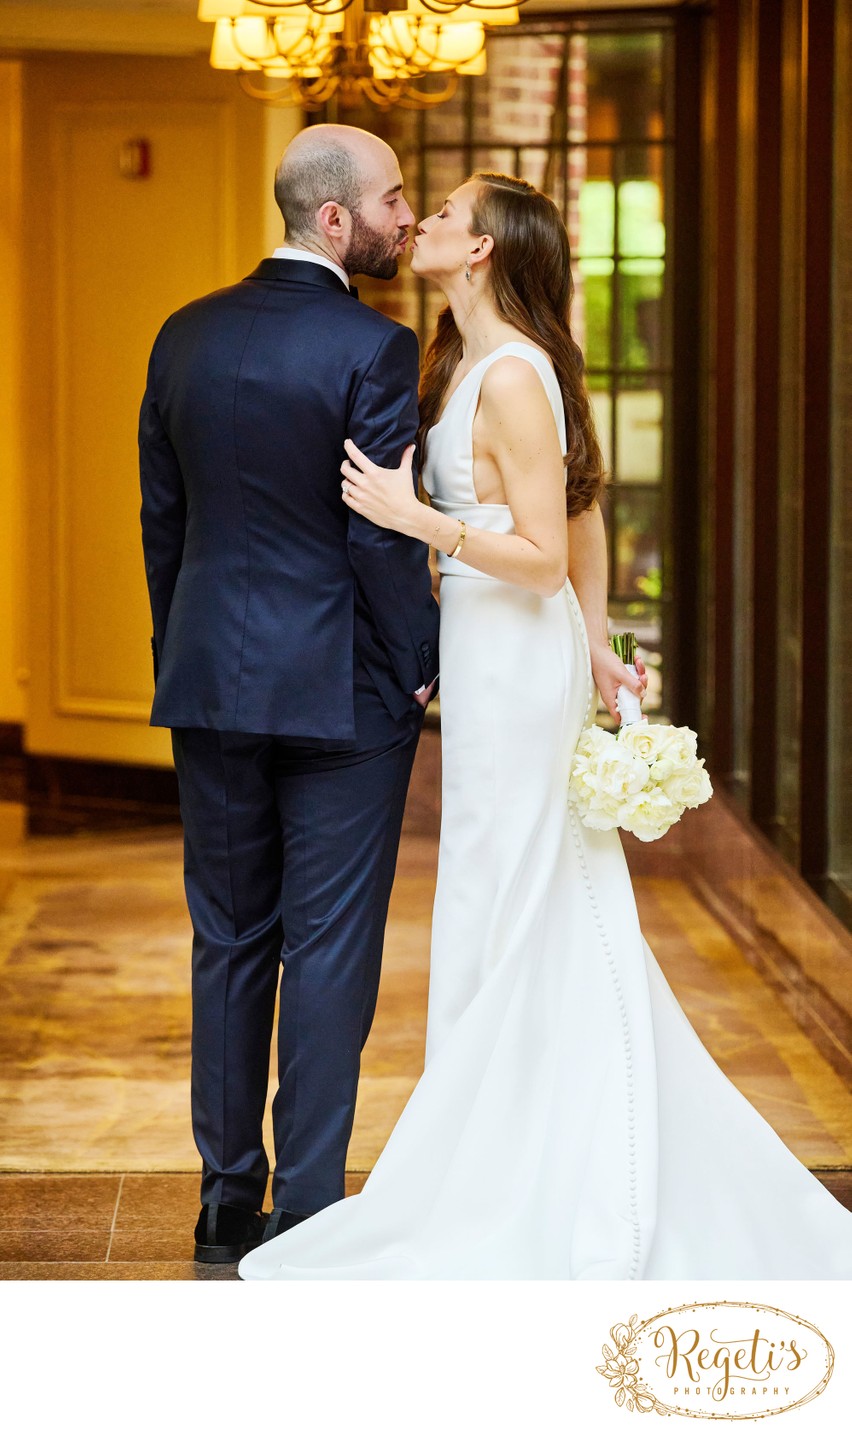 Paige and Harrison’s Beautiful Jewish Wedding at Four Seasons Hotel Washington, DC